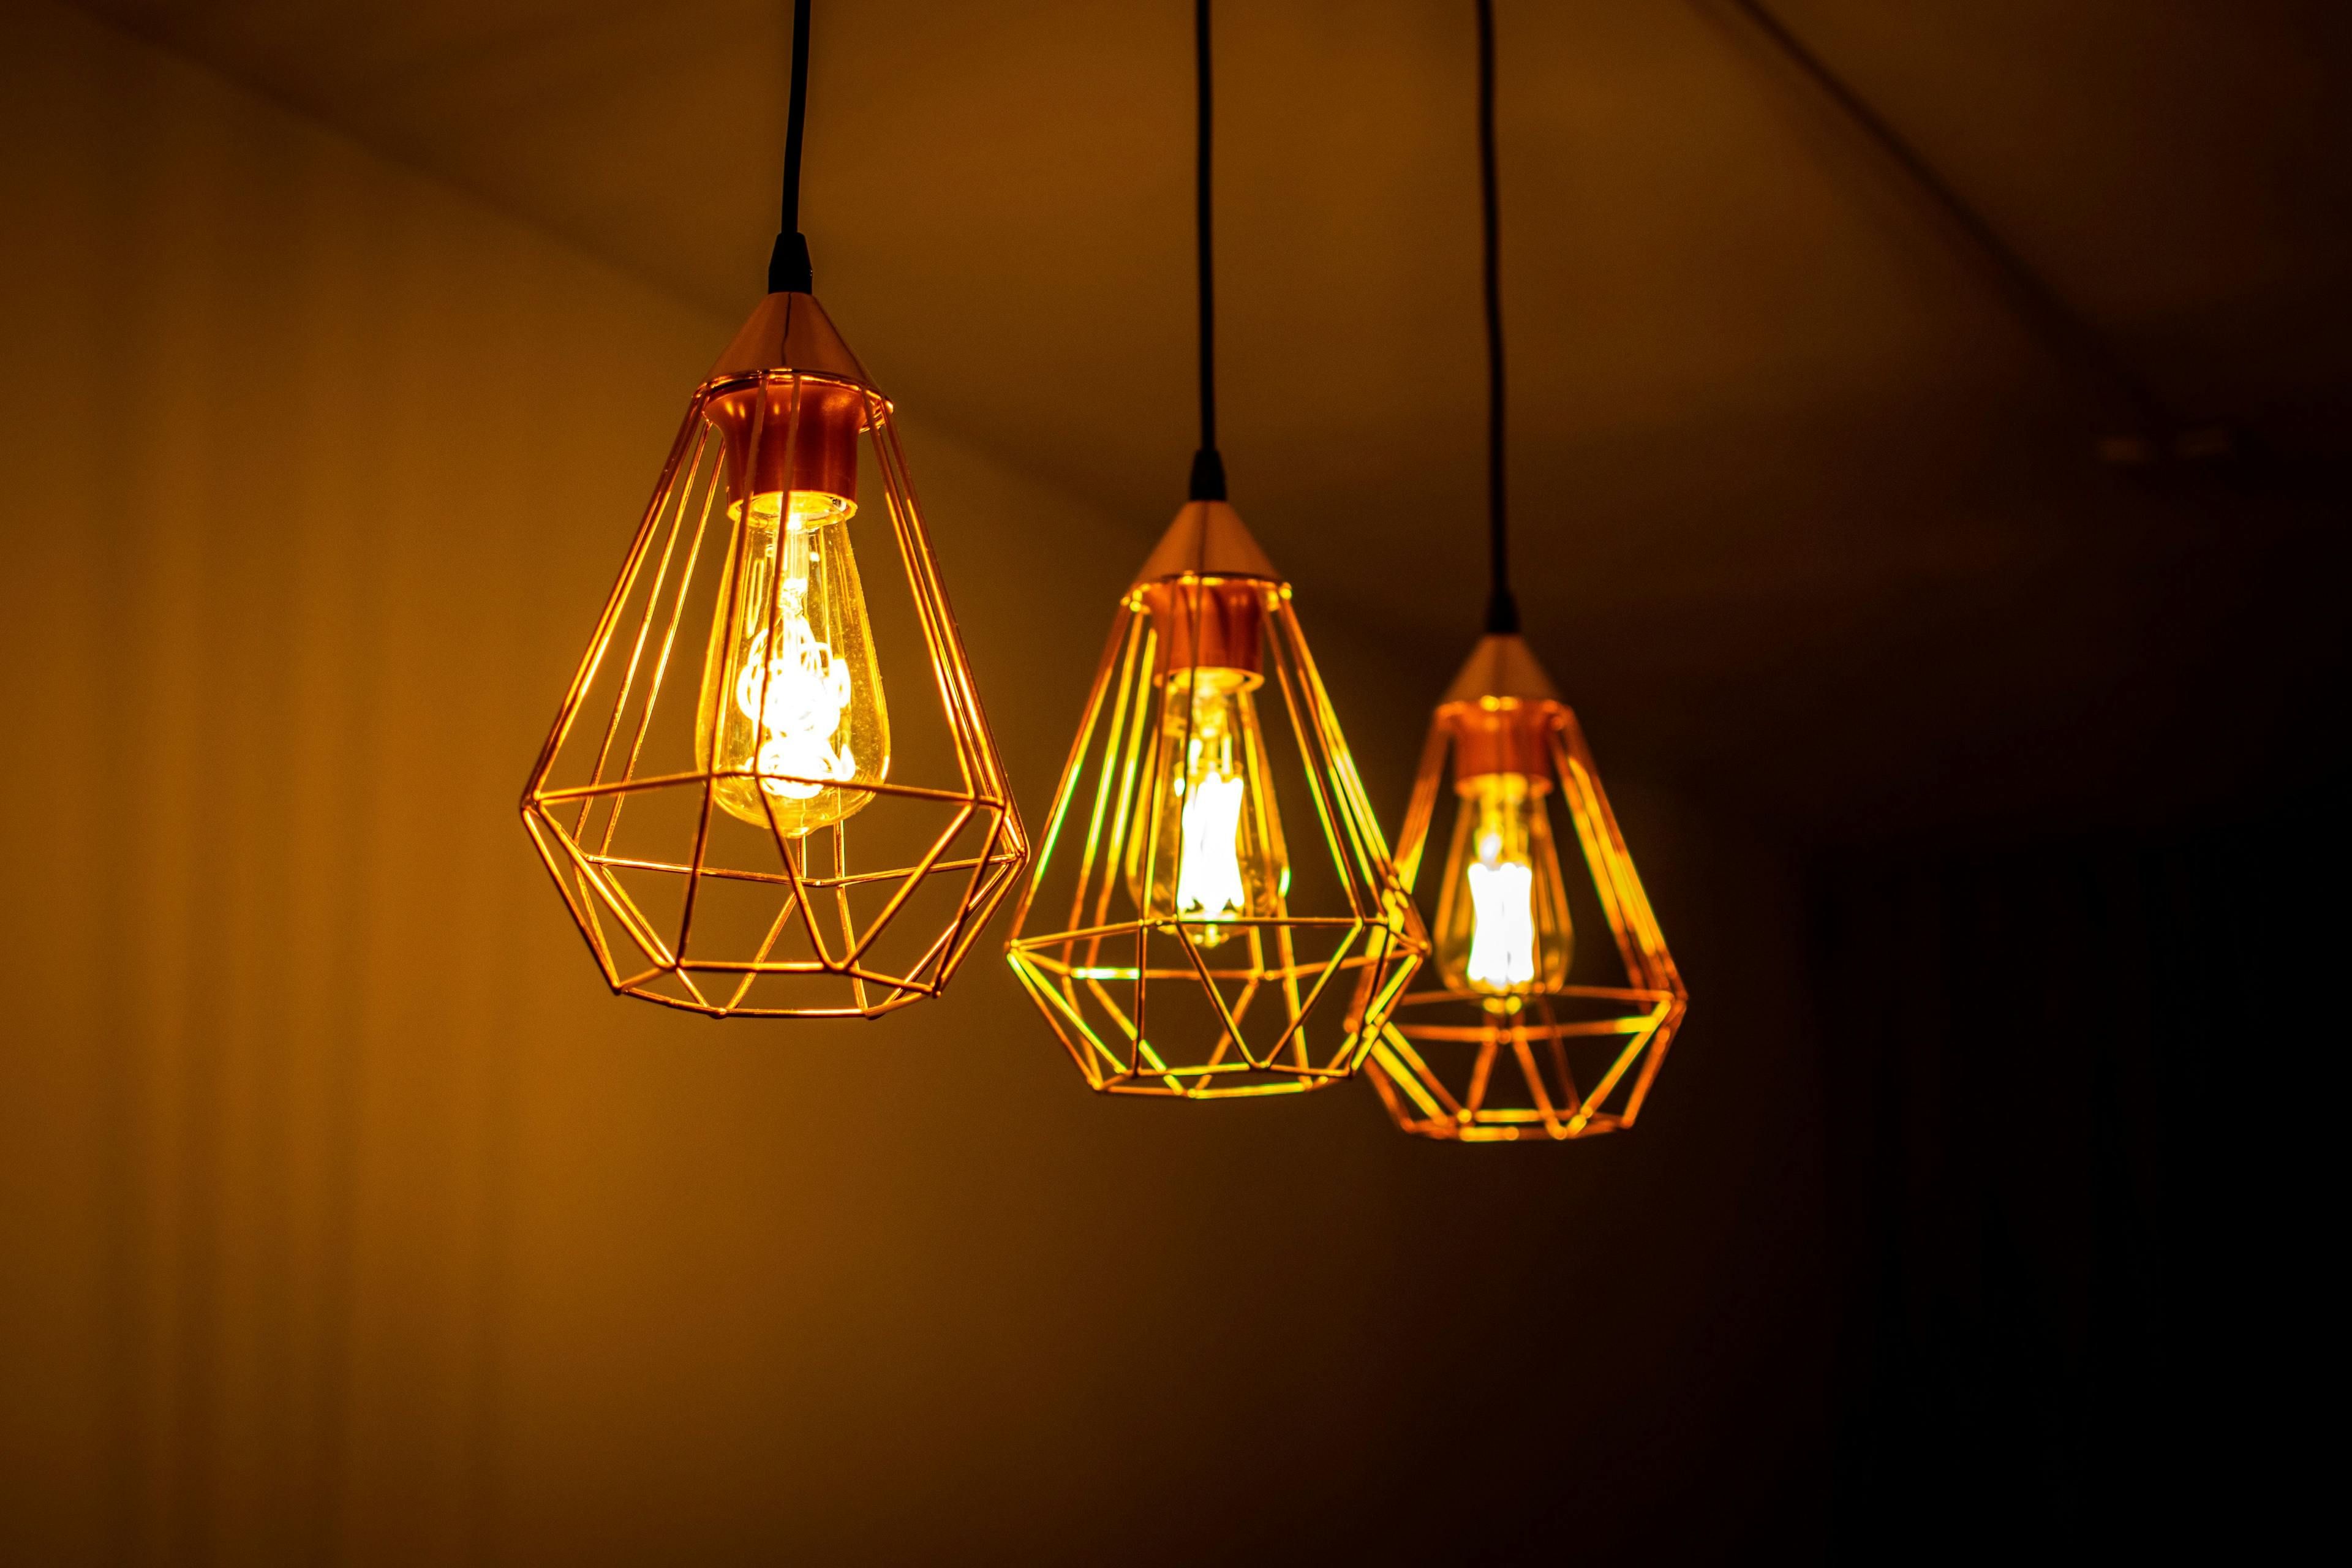 Three modern retro light bulbs hanging